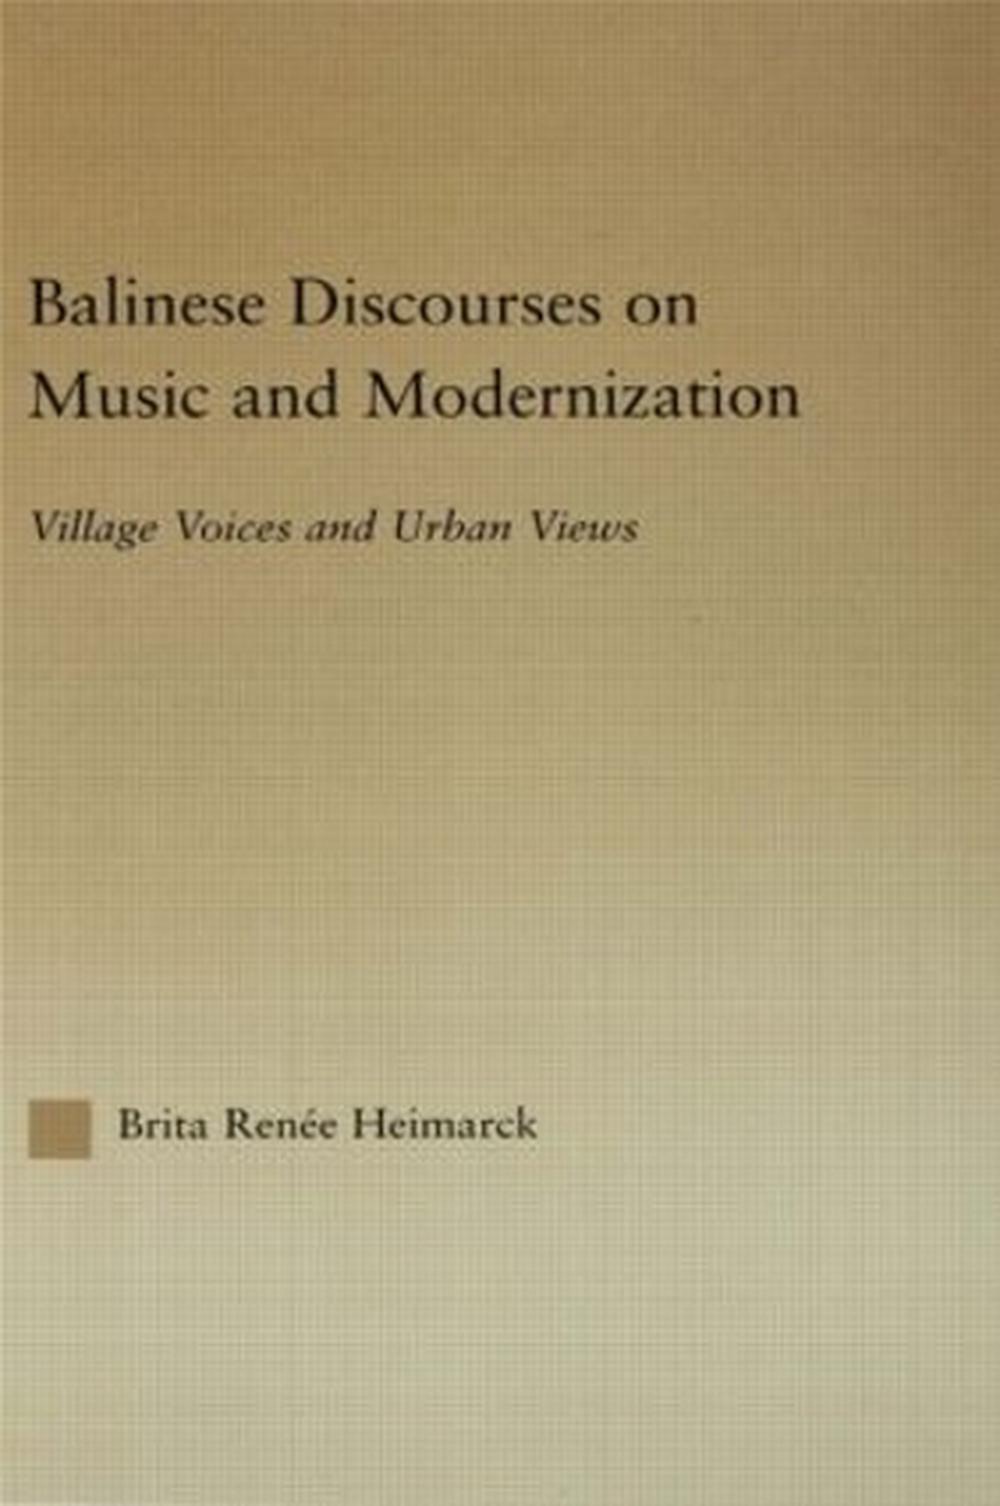 (PDF) Balinese Hybridities: Balinese Music as Global Phenomena | Peter Steele - blogger.com